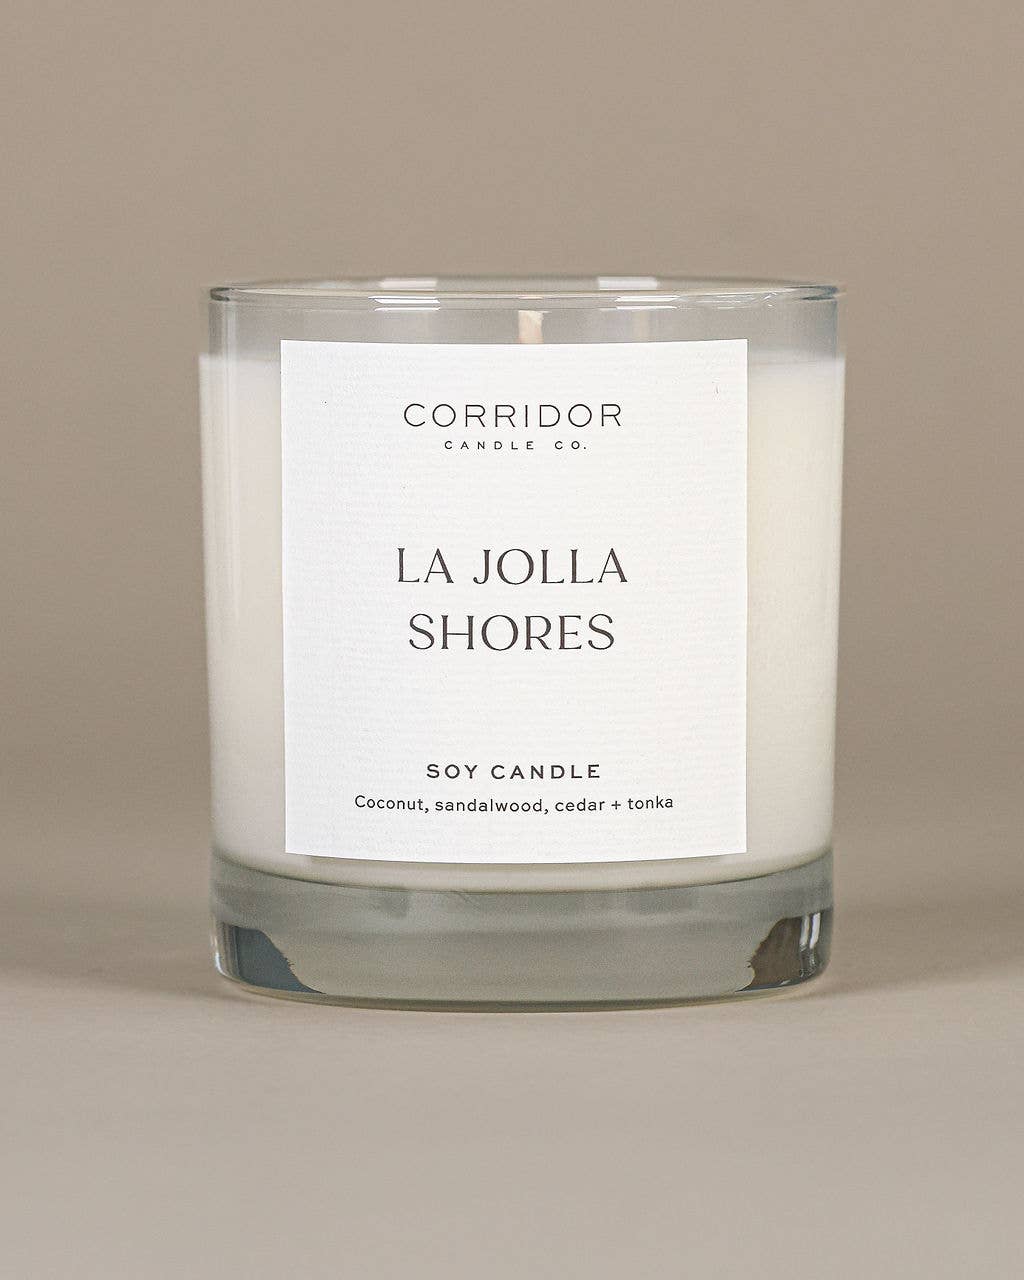 La Jolla Shores Soy Candle